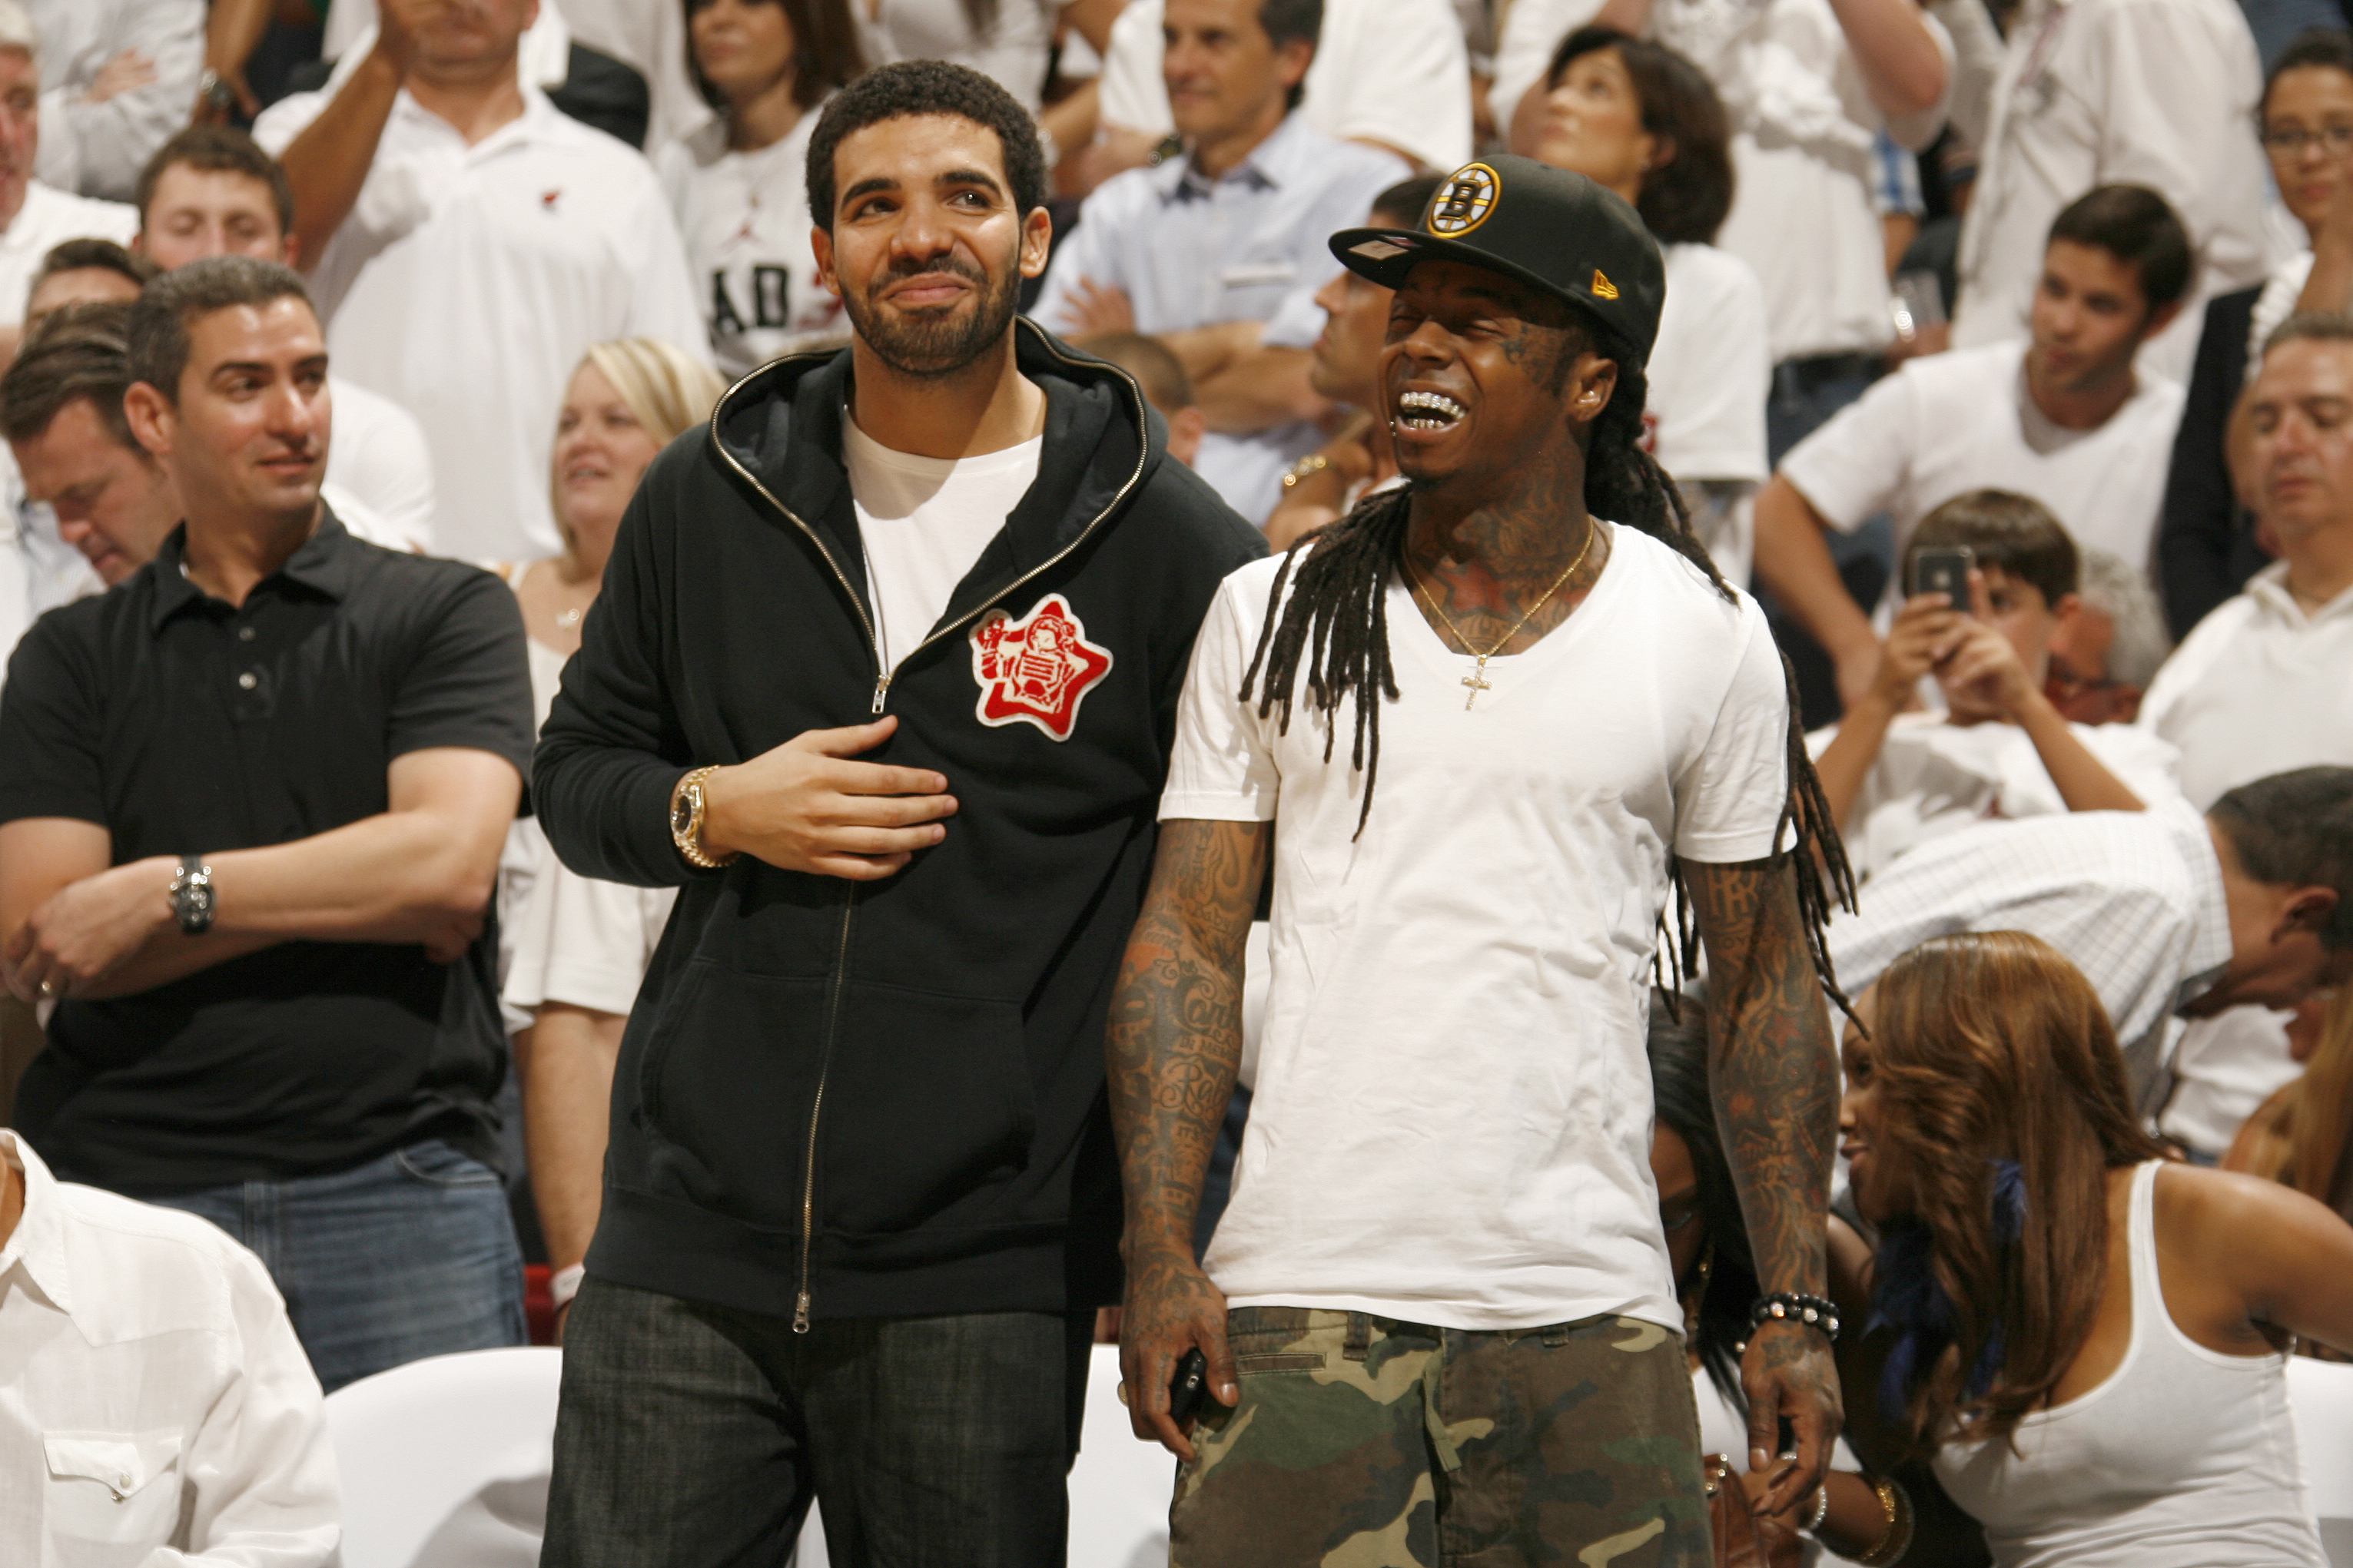 Miss Me - song and lyrics by Drake, Lil Wayne